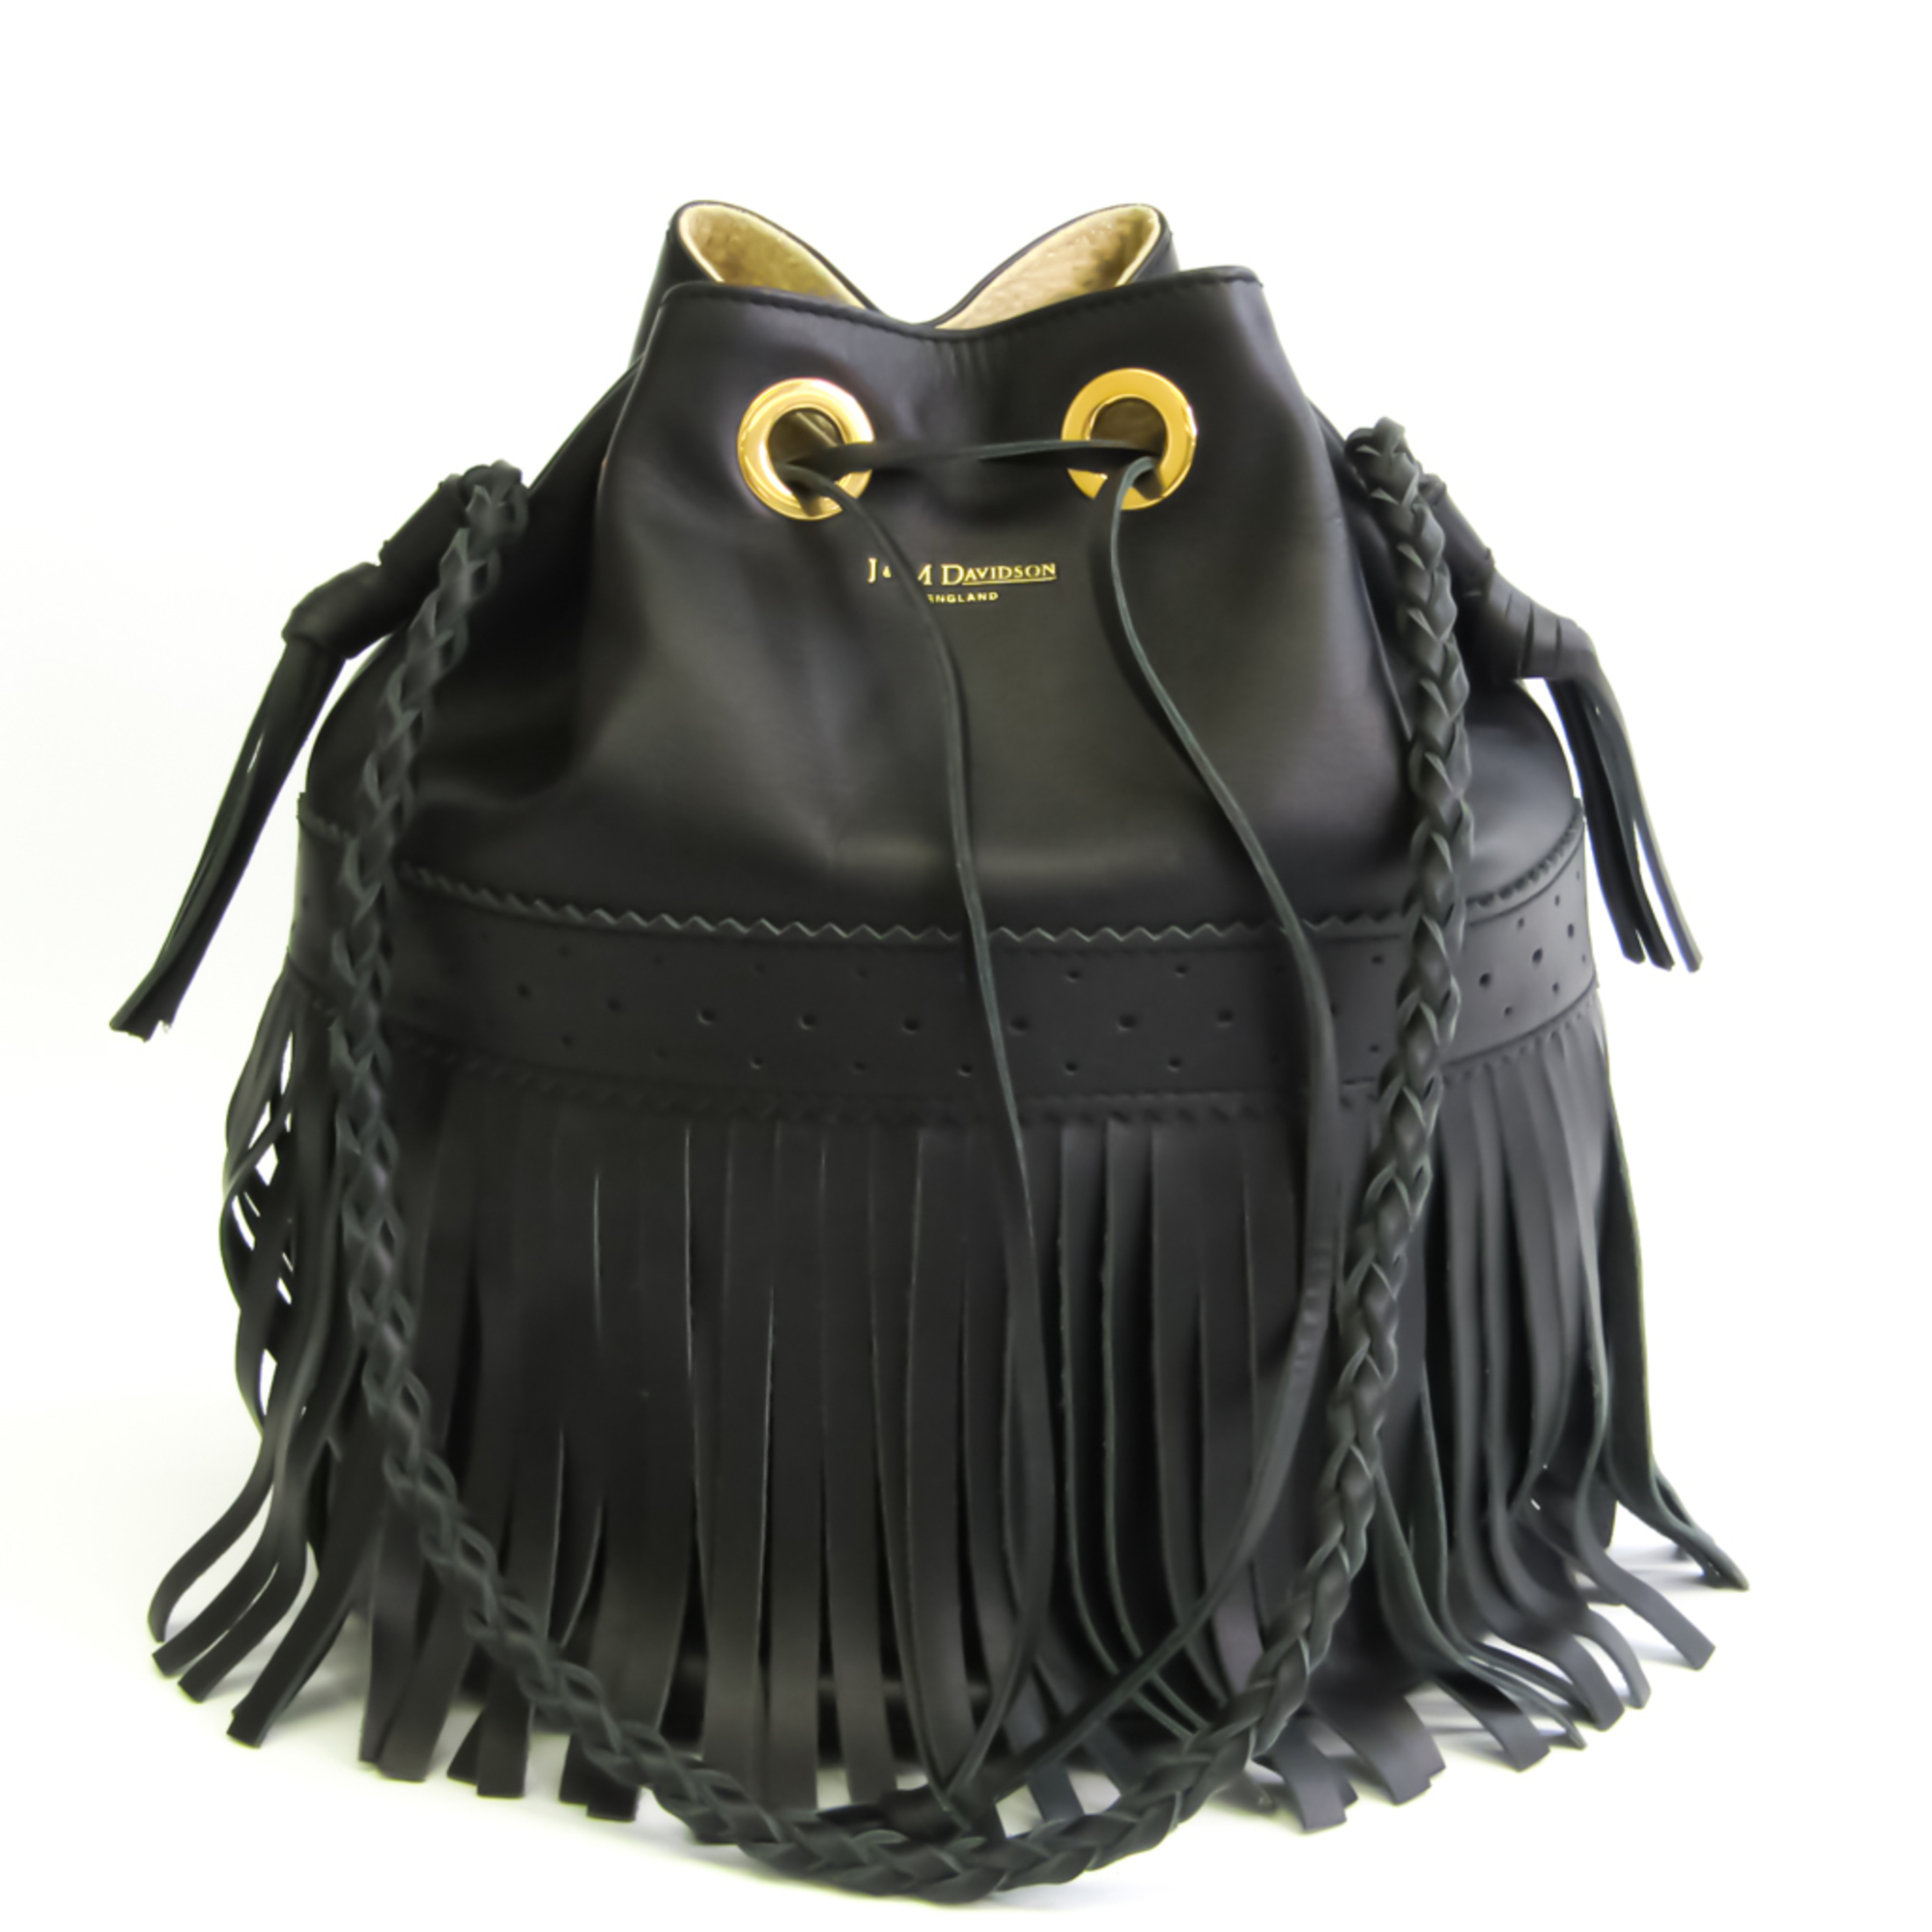 J&M Davidson Carnival L Women's Leather Shoulder Bag Black | eLADY Globazone